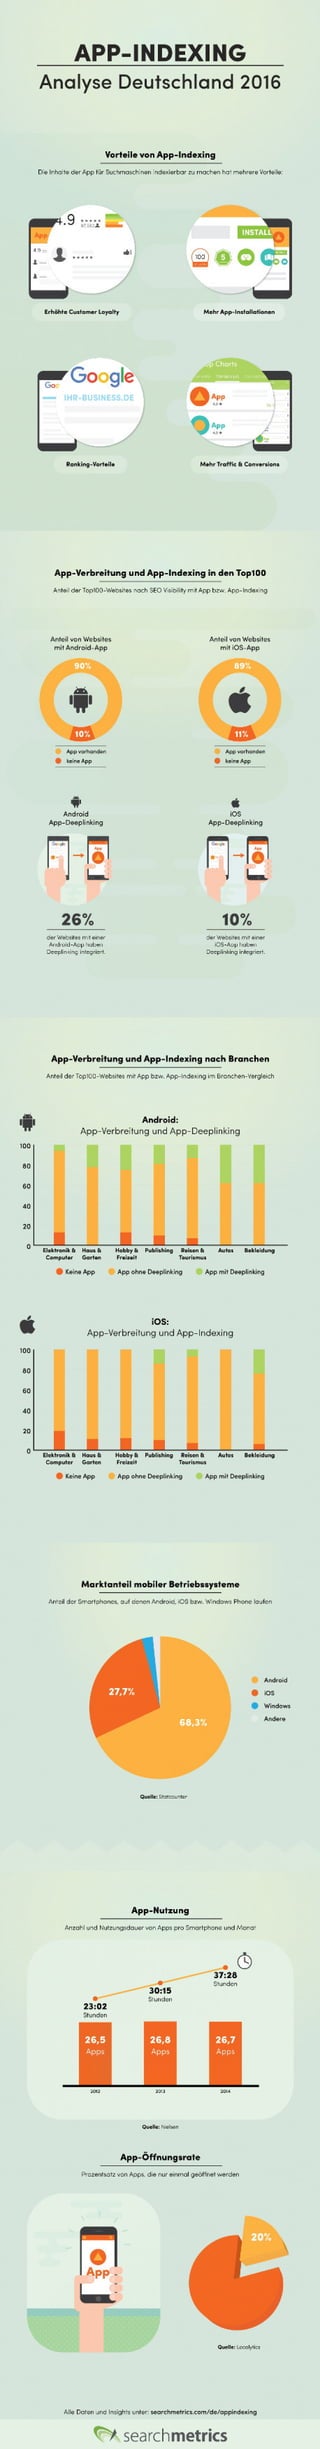 [DE] Infografik: App Indexing